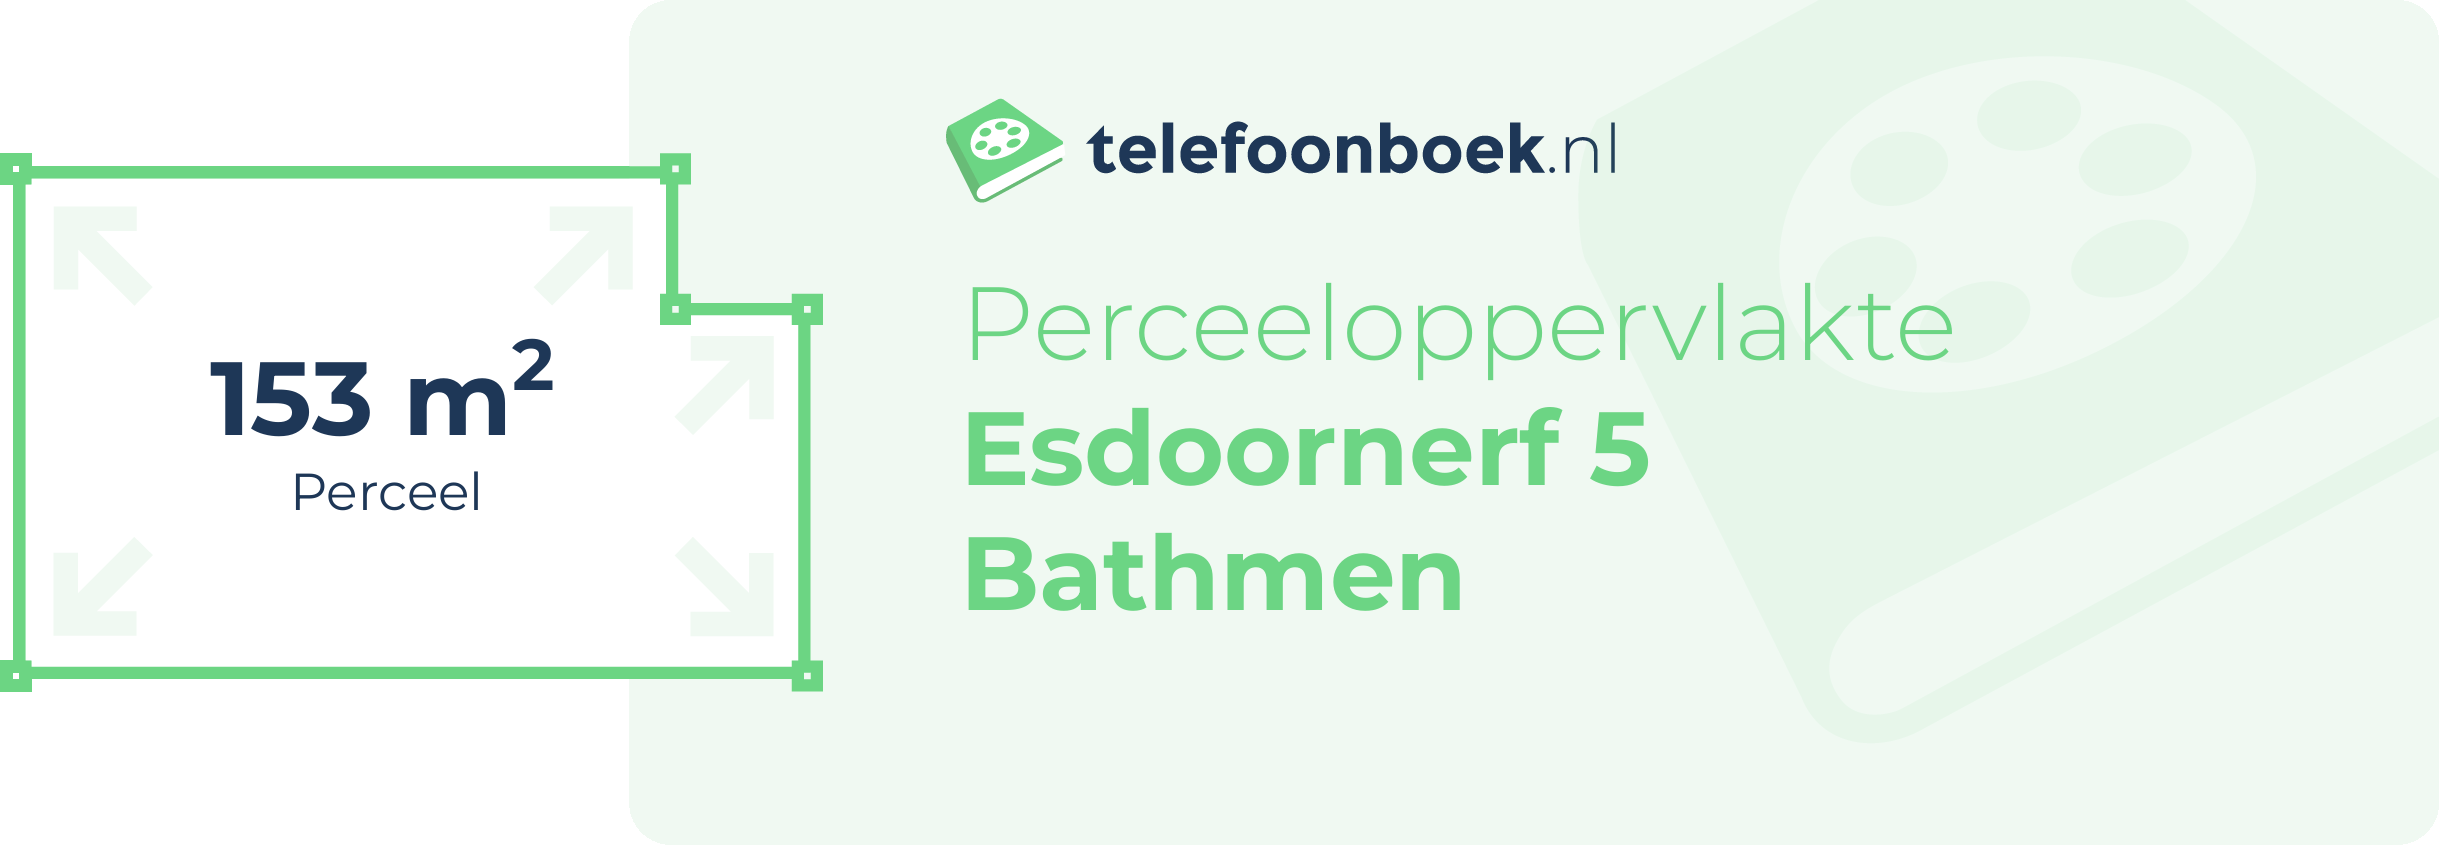 Perceeloppervlakte Esdoornerf 5 Bathmen